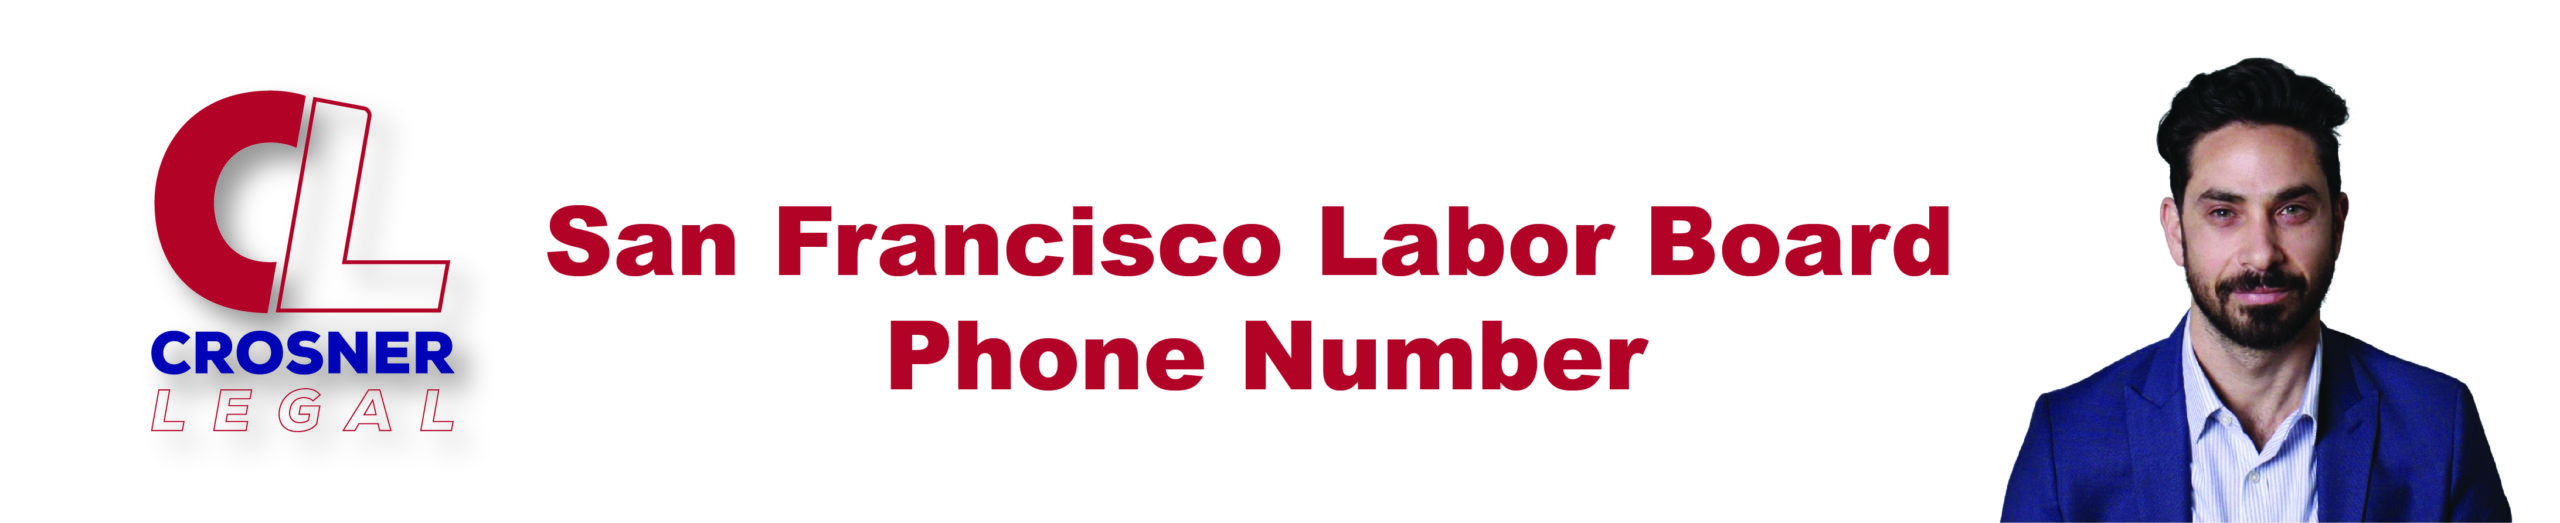 San Francisco Labor Board Phone Number